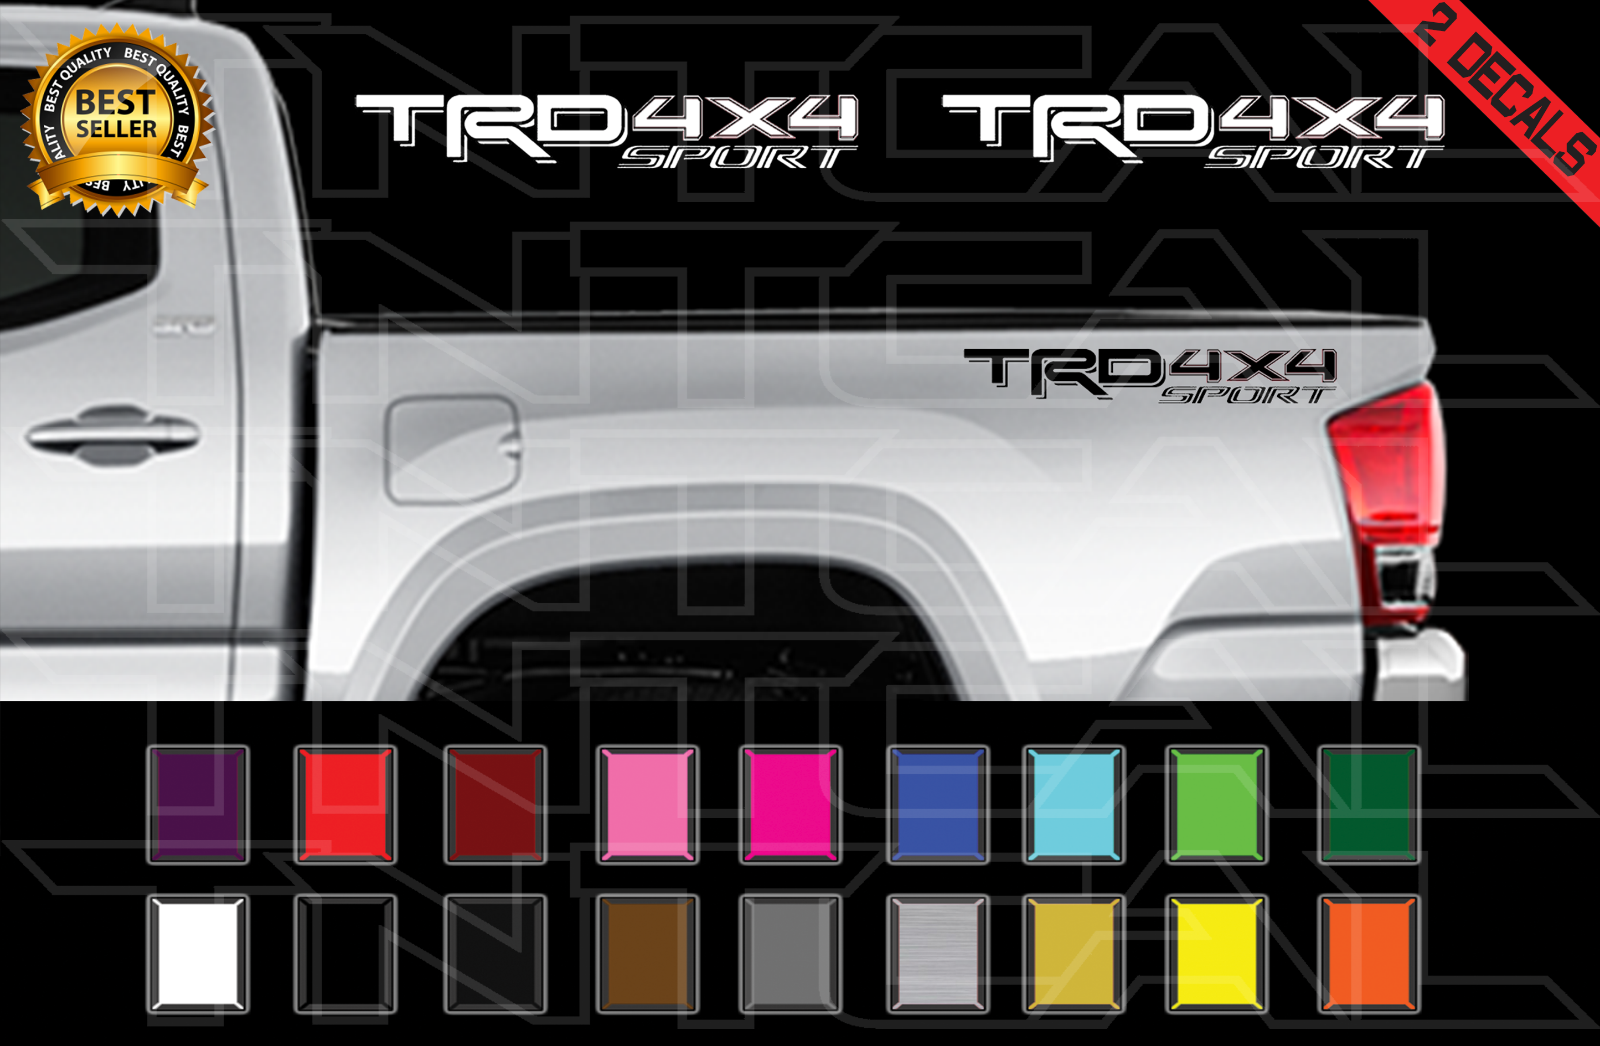 TRD 4x4 SPORT Decals Set Fits: Tacoma Racing Truck Bed Vinyl Stickers 2016-2020